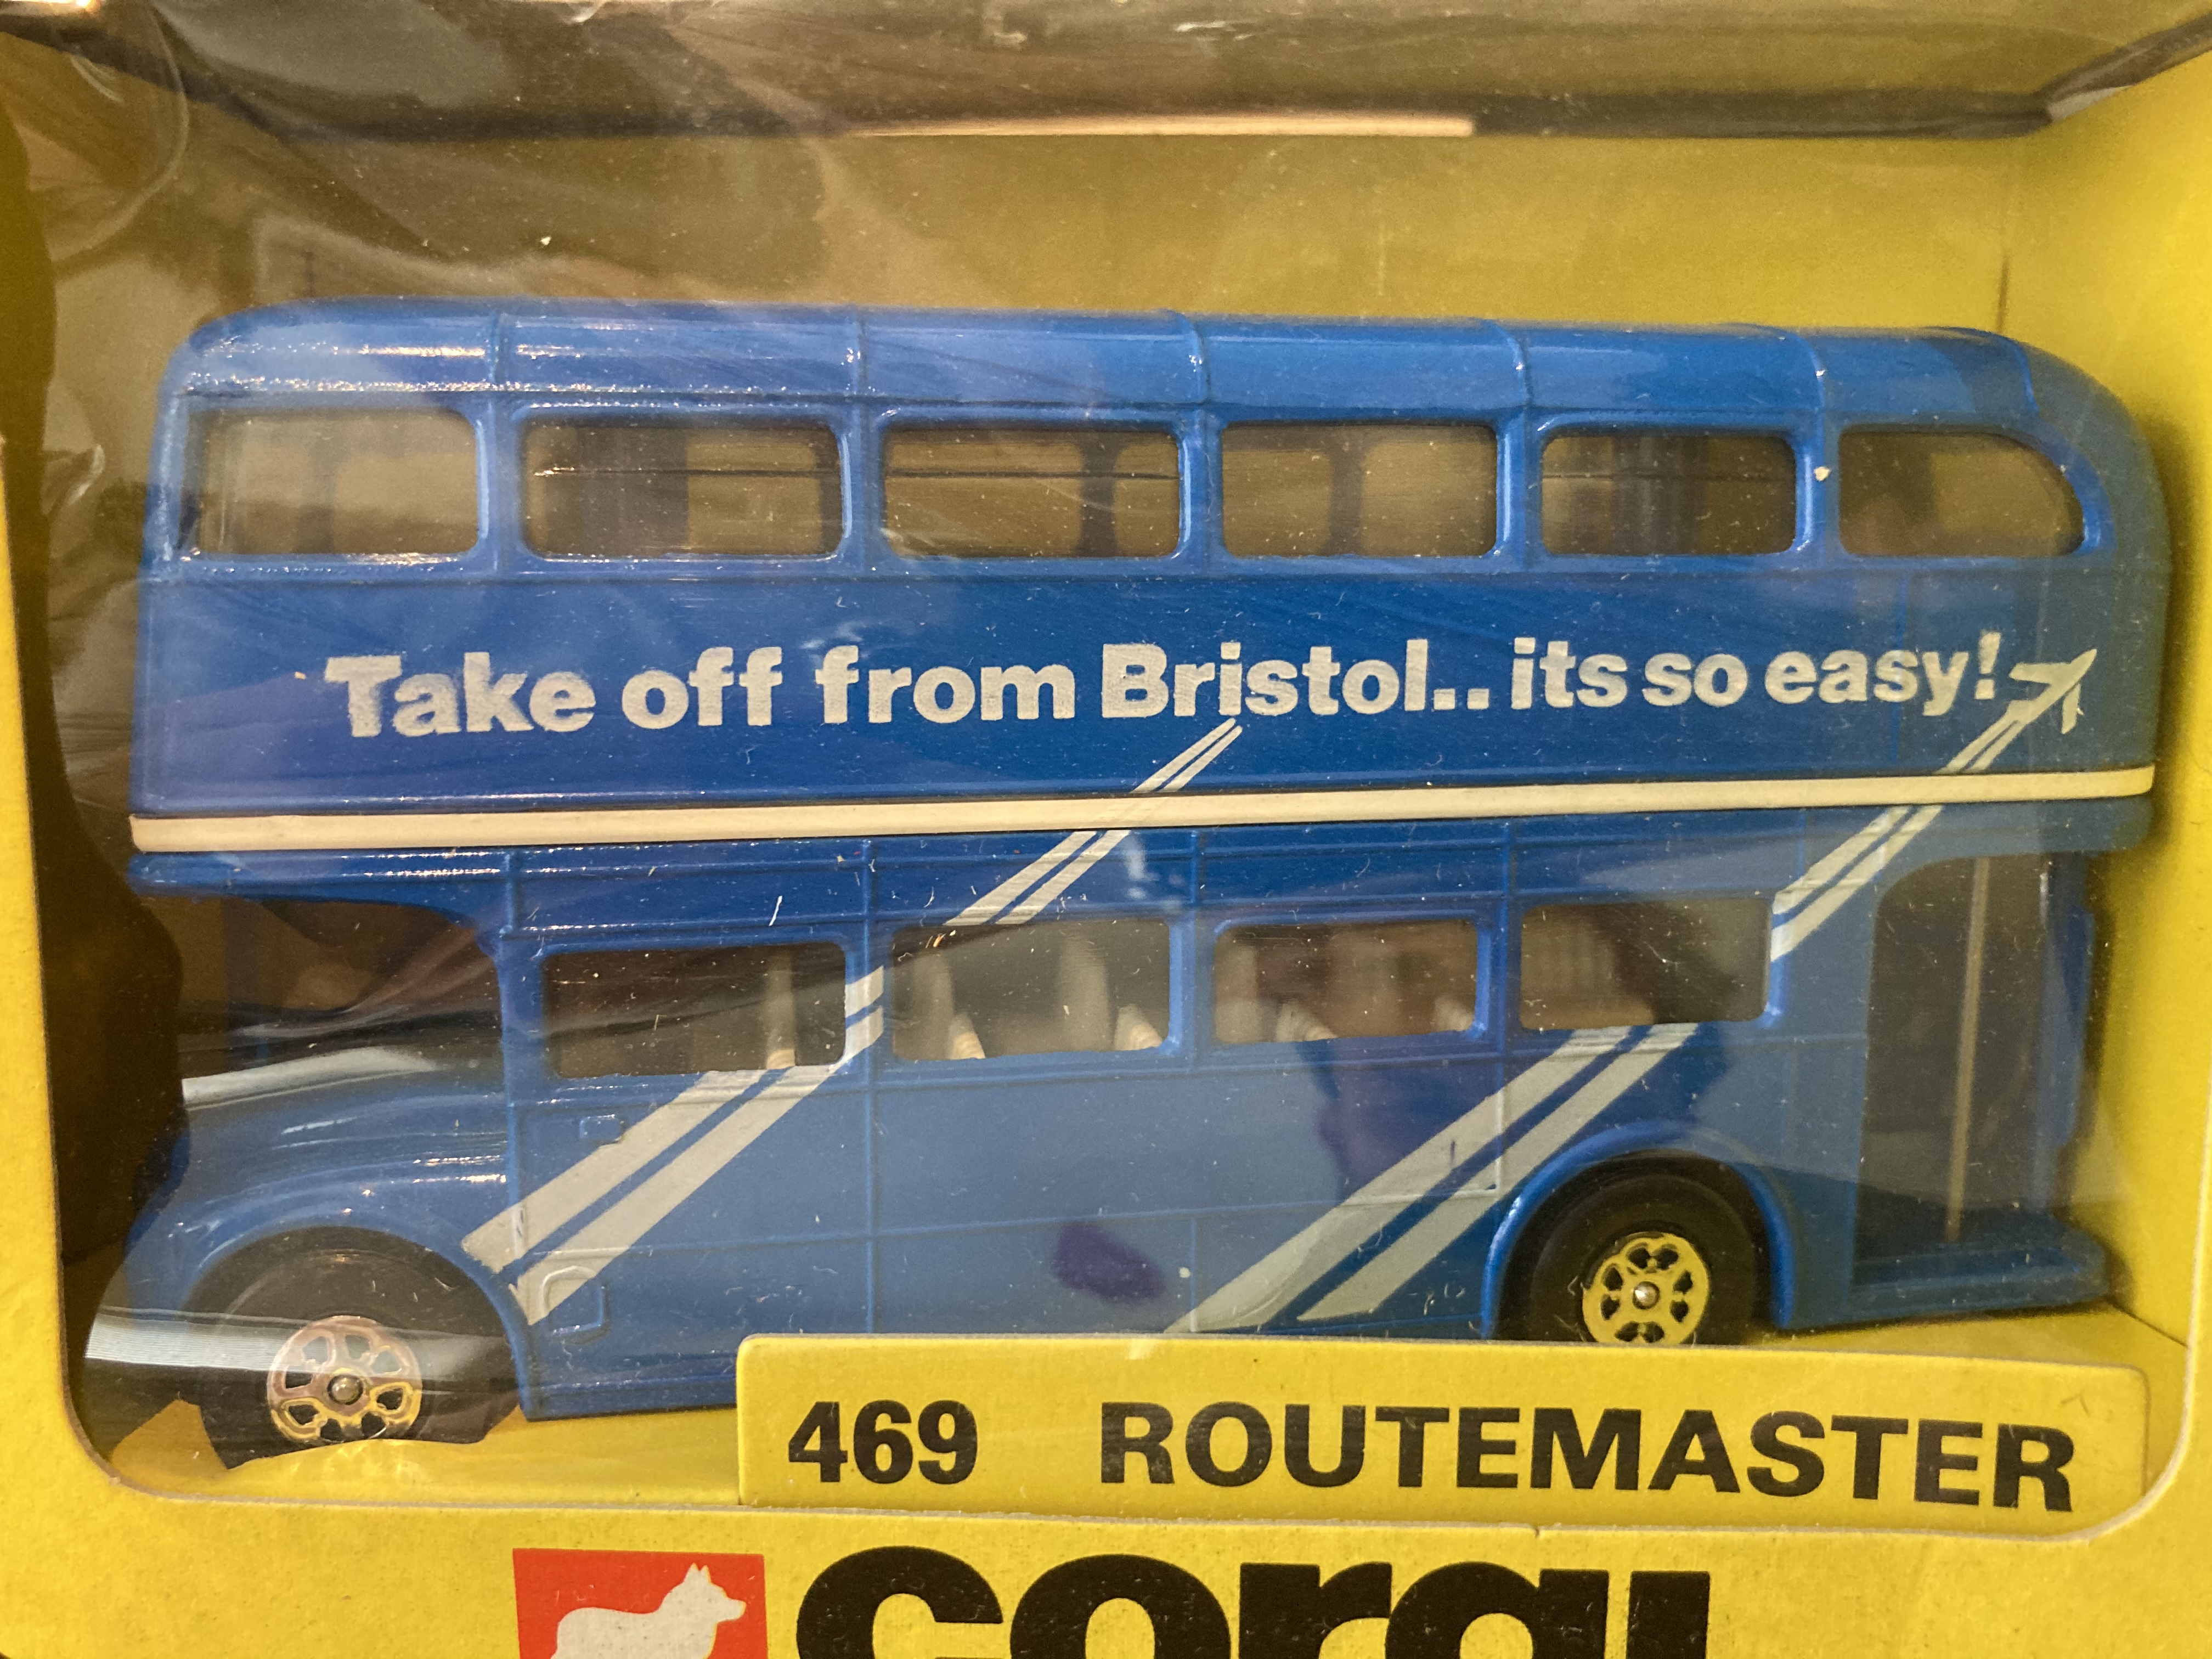 Corgi Take Off From Bristol Routemaster - 469 - Image 2 of 4